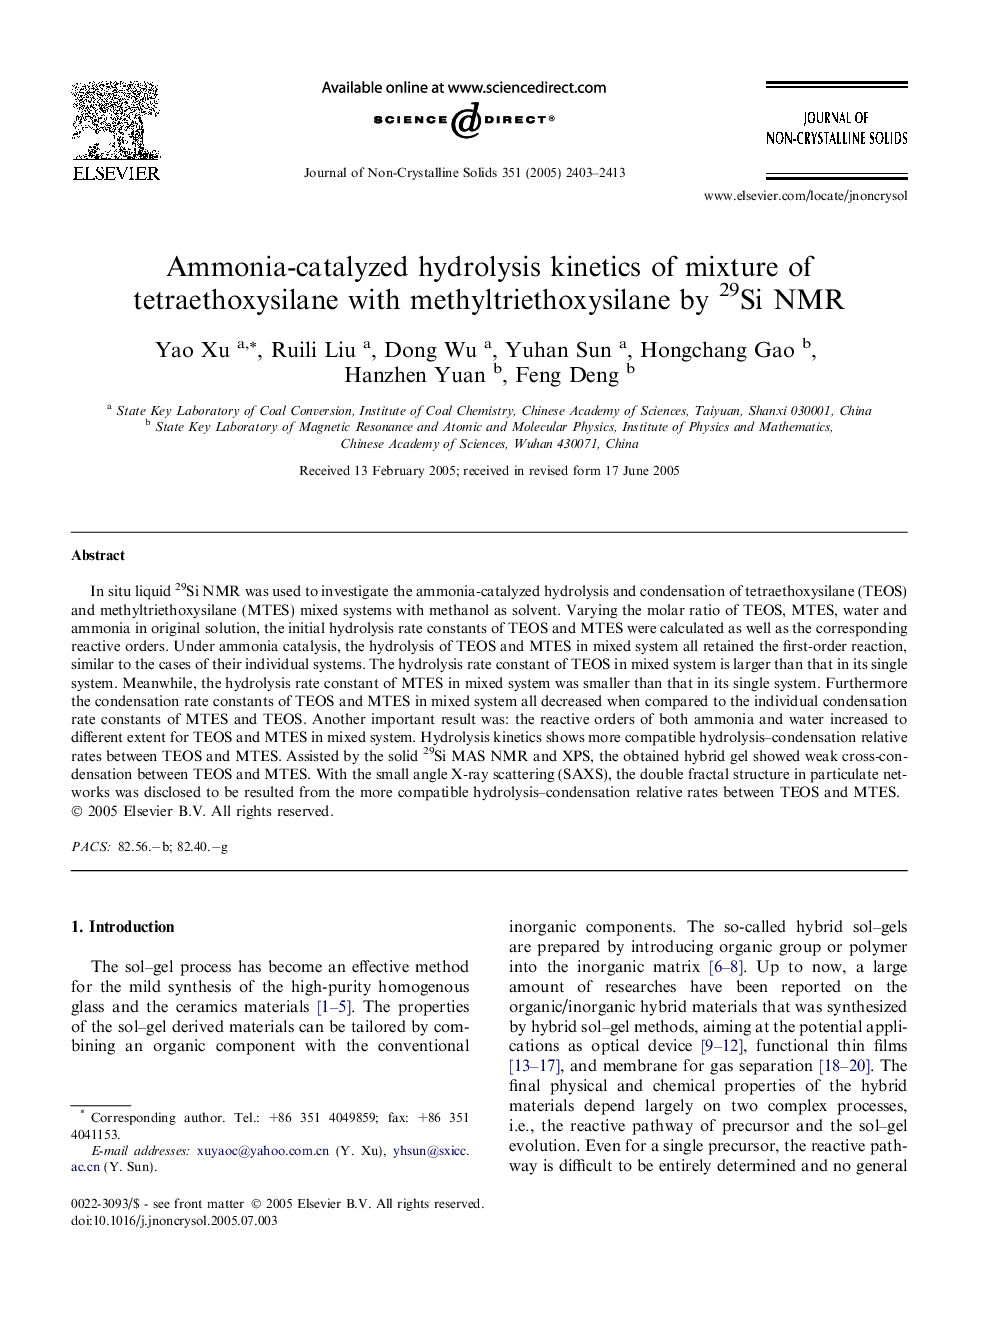 Ammonia-catalyzed hydrolysis kinetics of mixture of tetraethoxysilane with methyltriethoxysilane by 29Si NMR